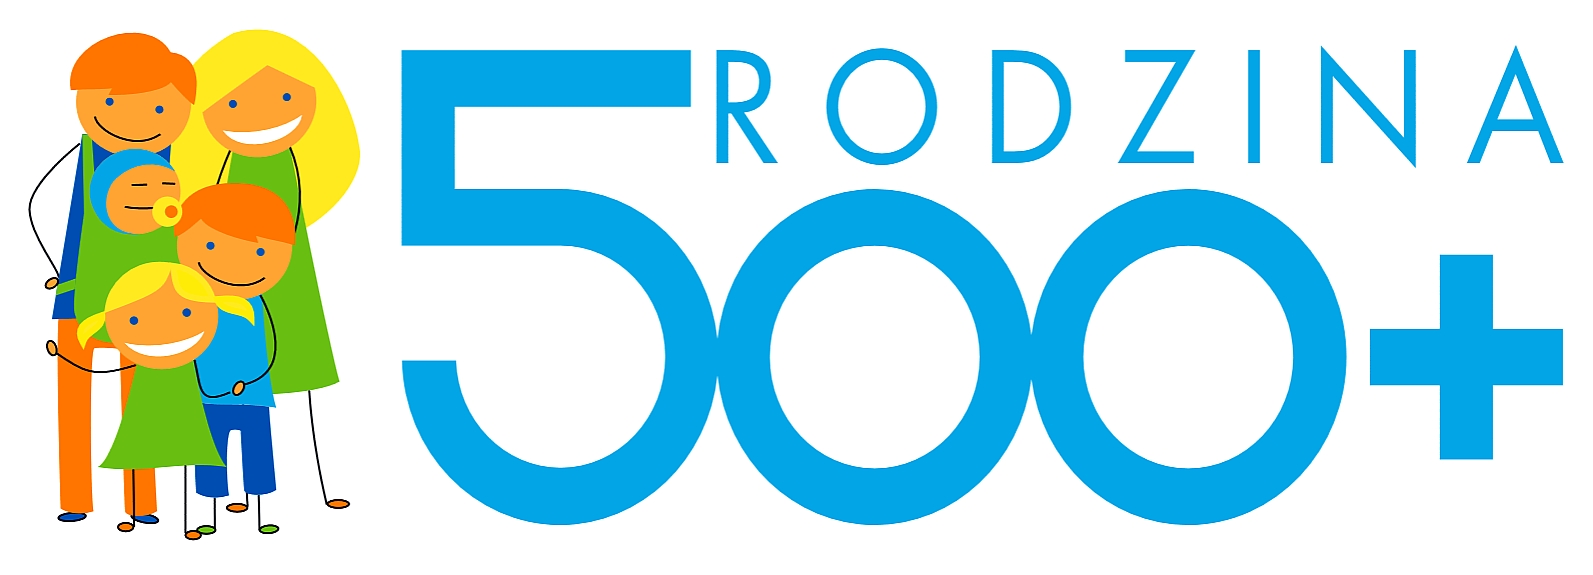 logo 500+